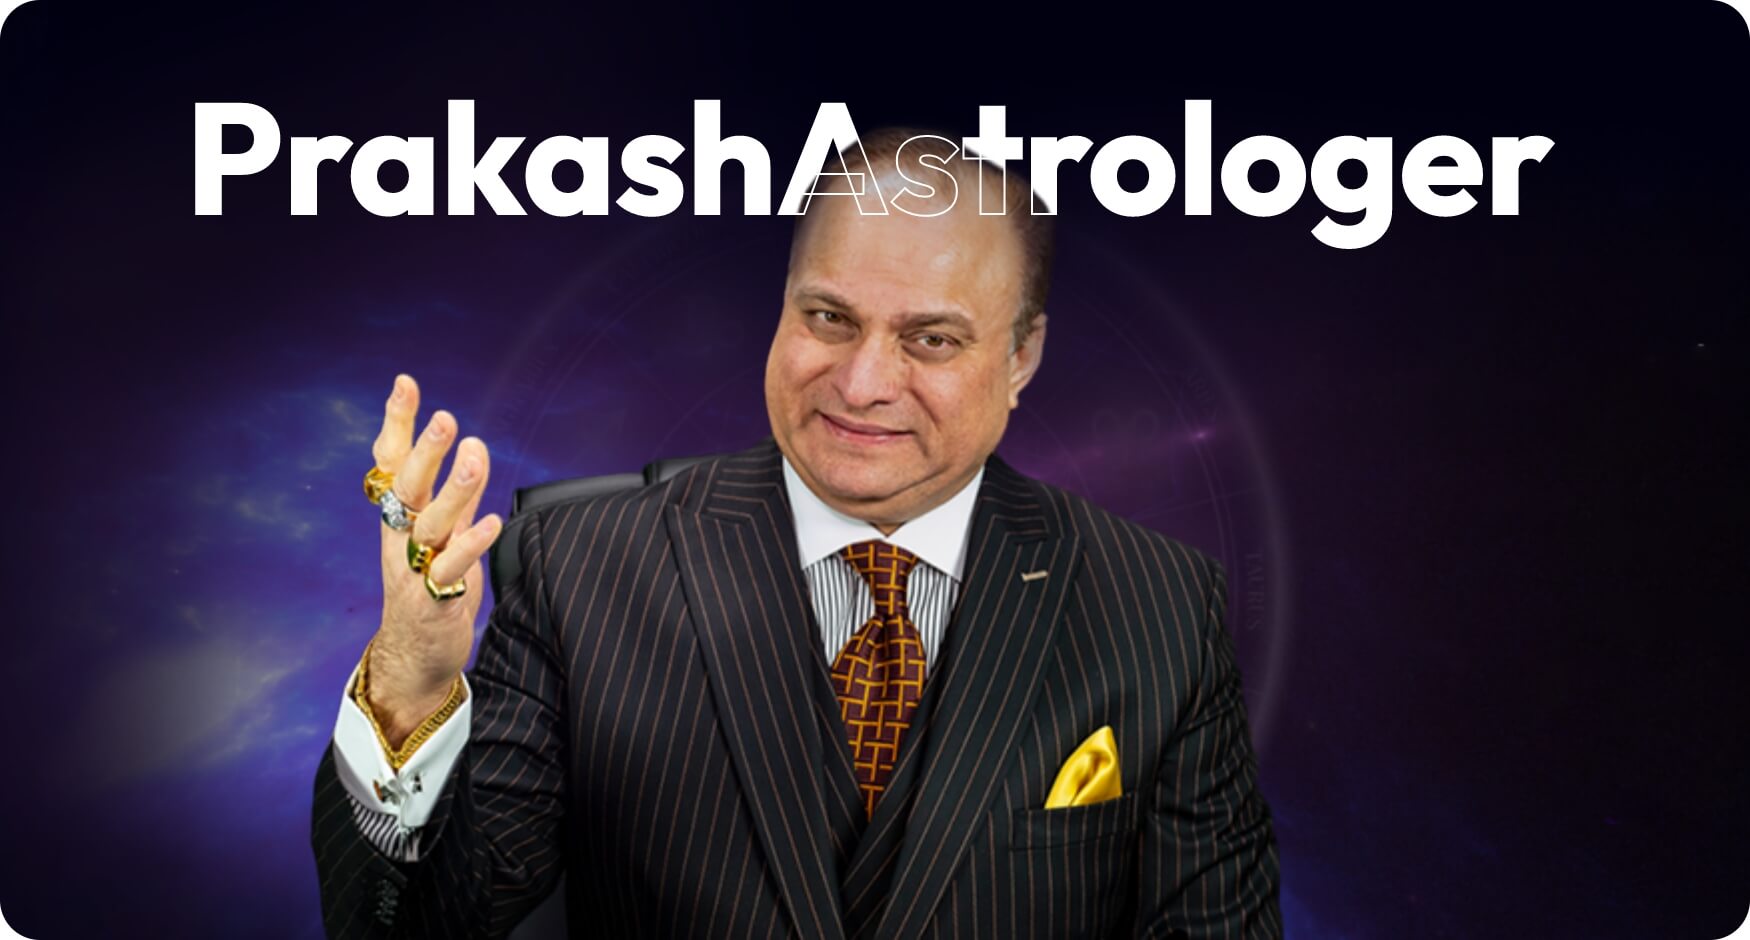 prakash-astrologer-case-study-by-ecare-infoway-llp